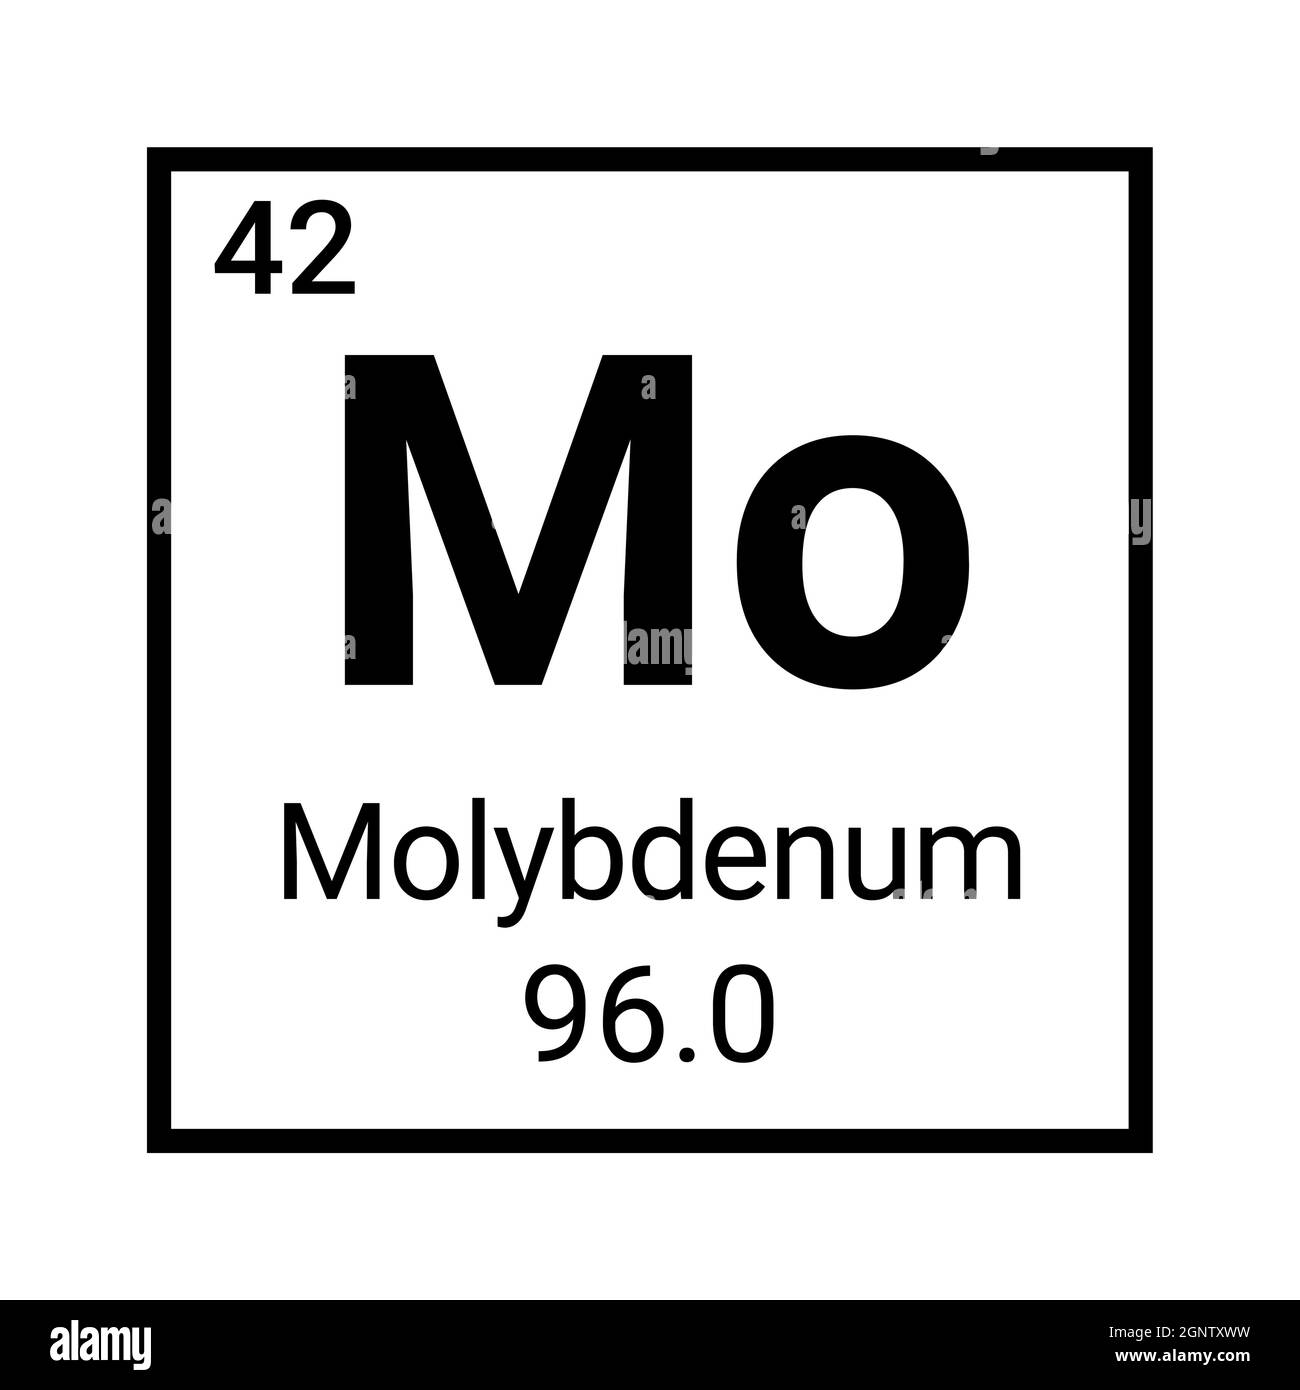 Molybdenum element symbol. Chemistry molybdenum periodic table atom sign icon Stock Vector